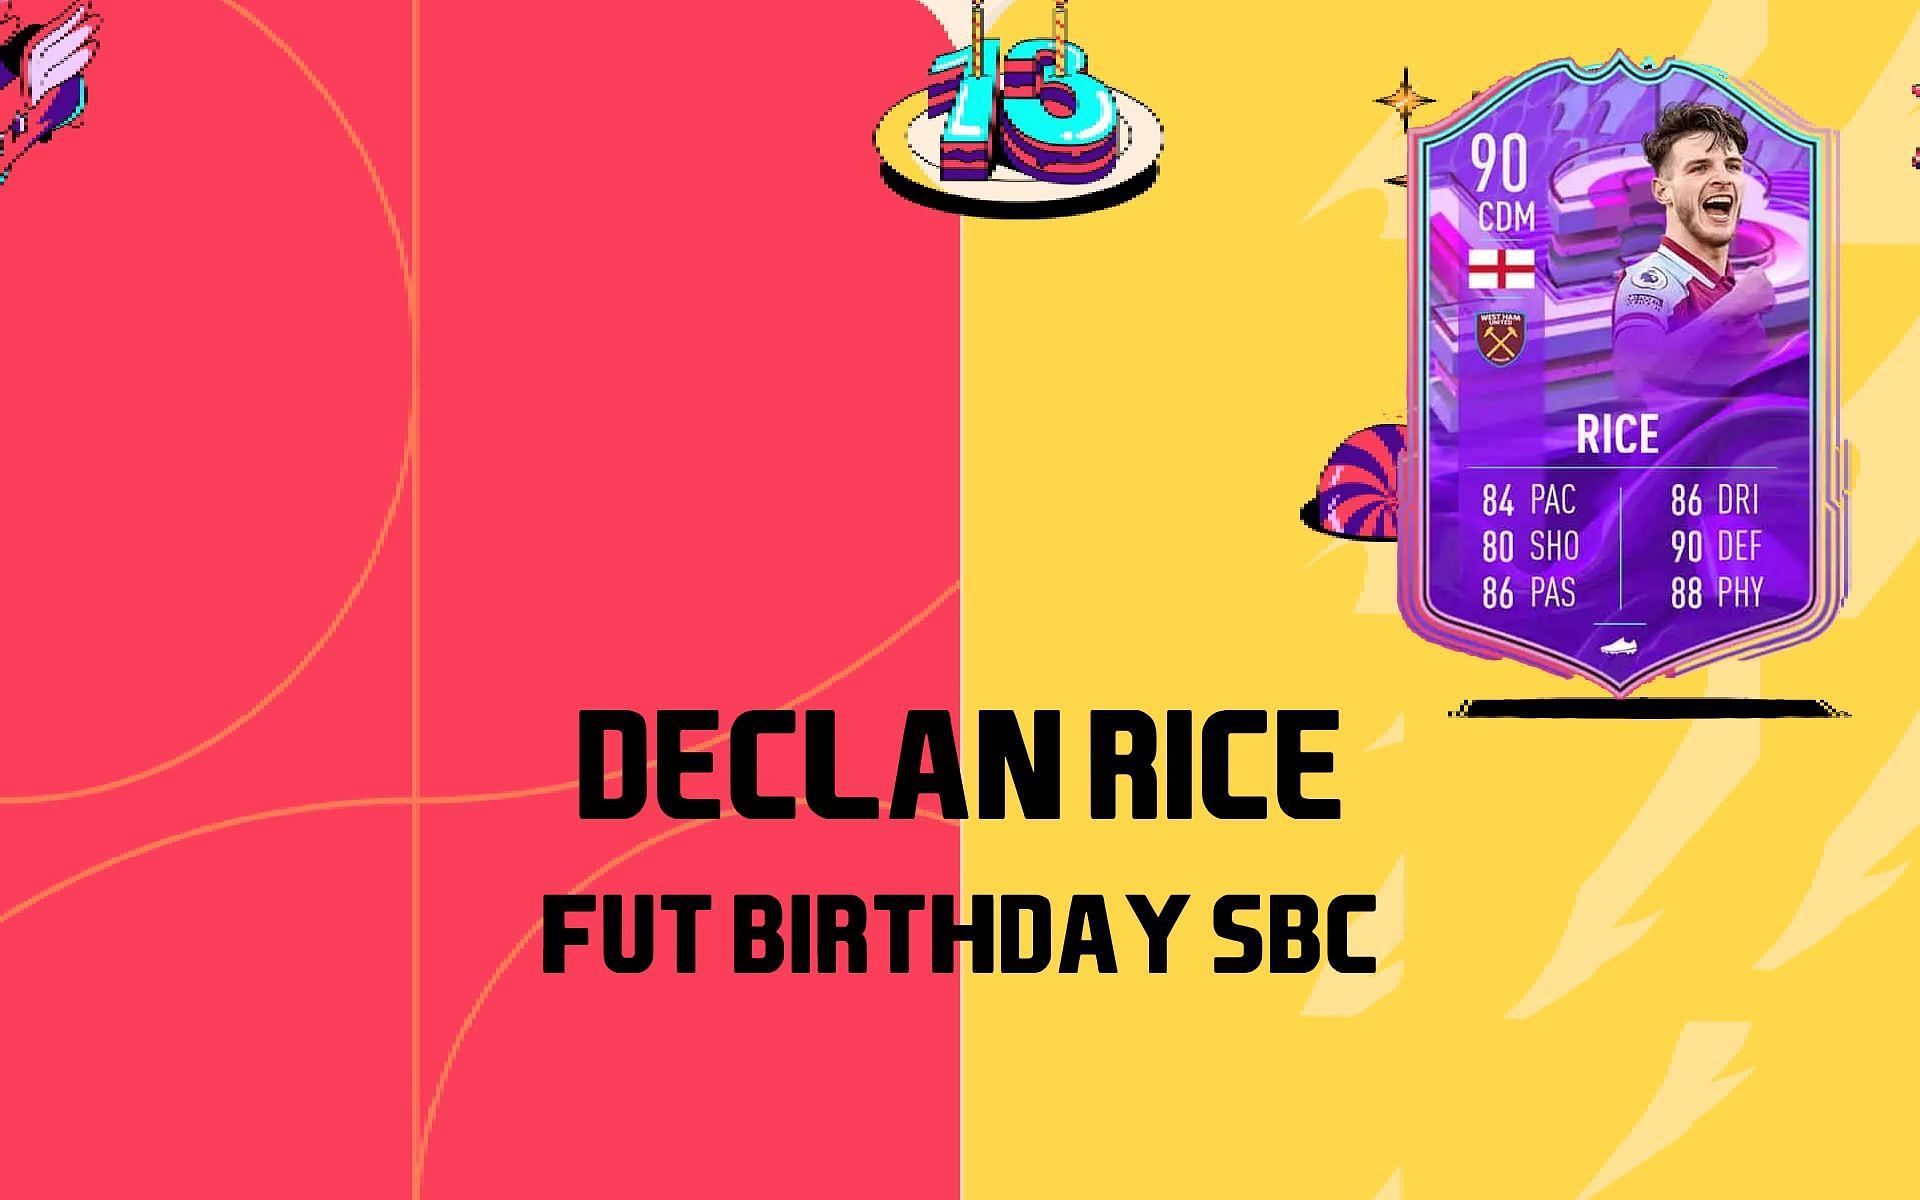 Declan Rice FUT Birthday SBC in FIFA 22 Ultimate Team (Image via Sportskeeda)